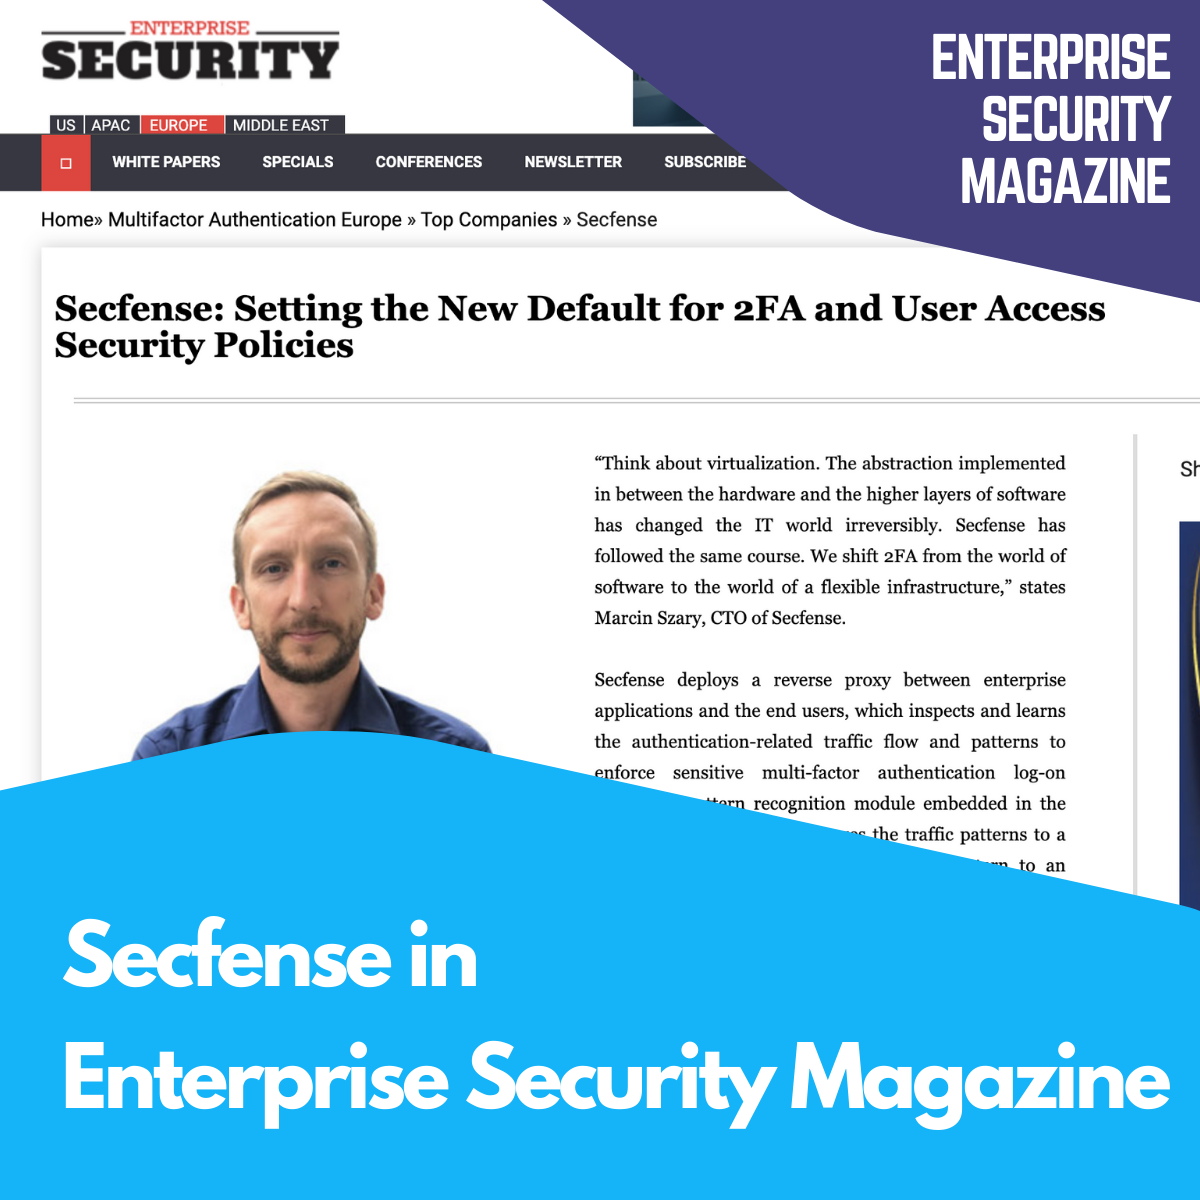 Enterprise Security Magazine about Secfense